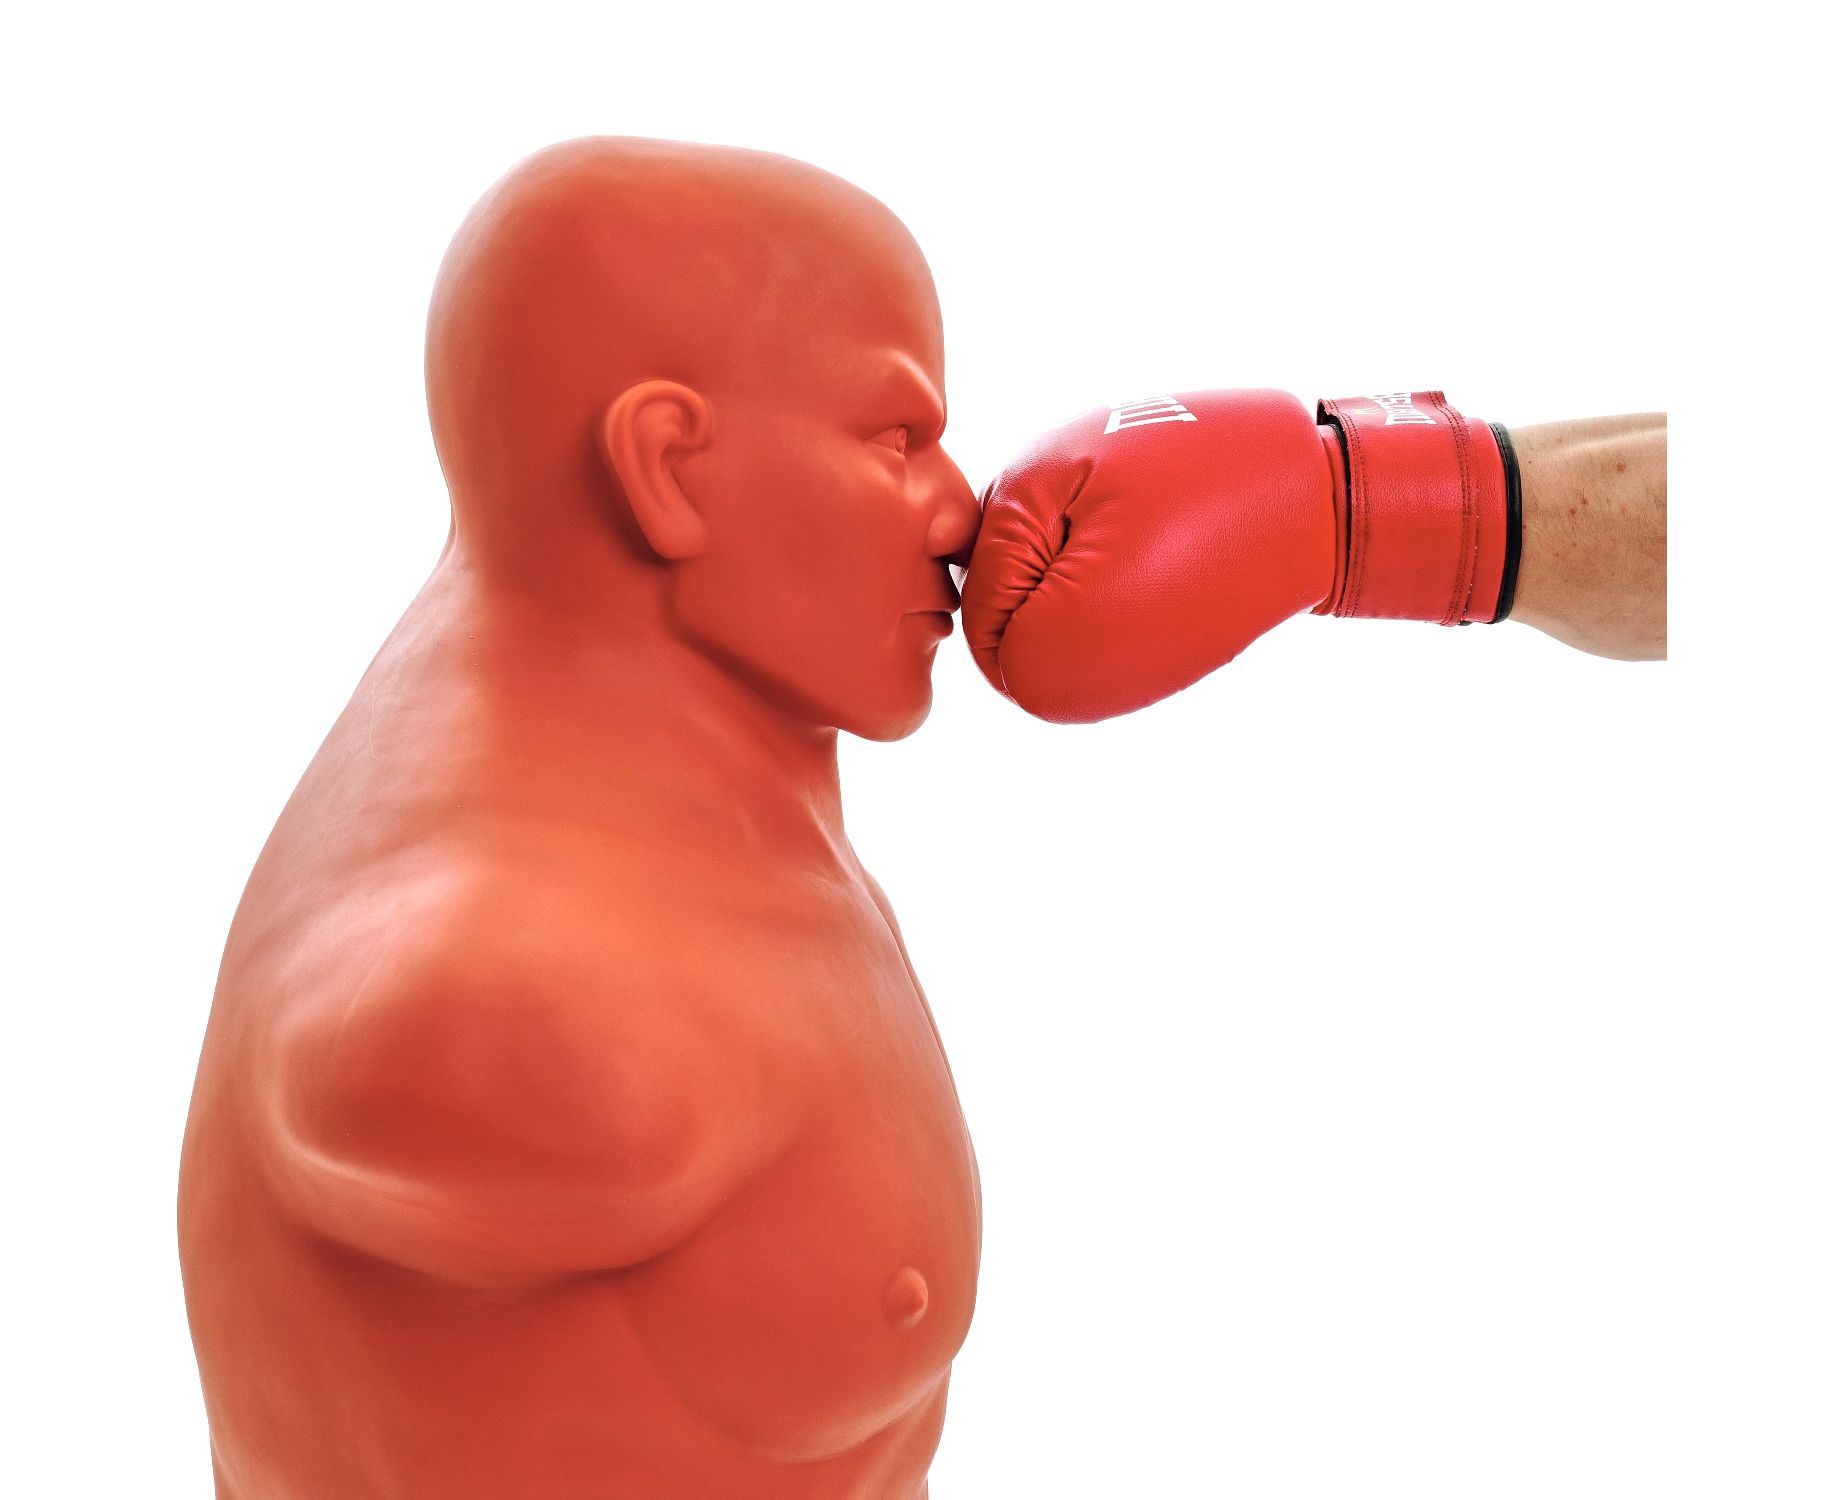 Манекен DFC Boxing Punching Man-Heavy TLS-A c регулировкой высоты, бежевый 1834_1500